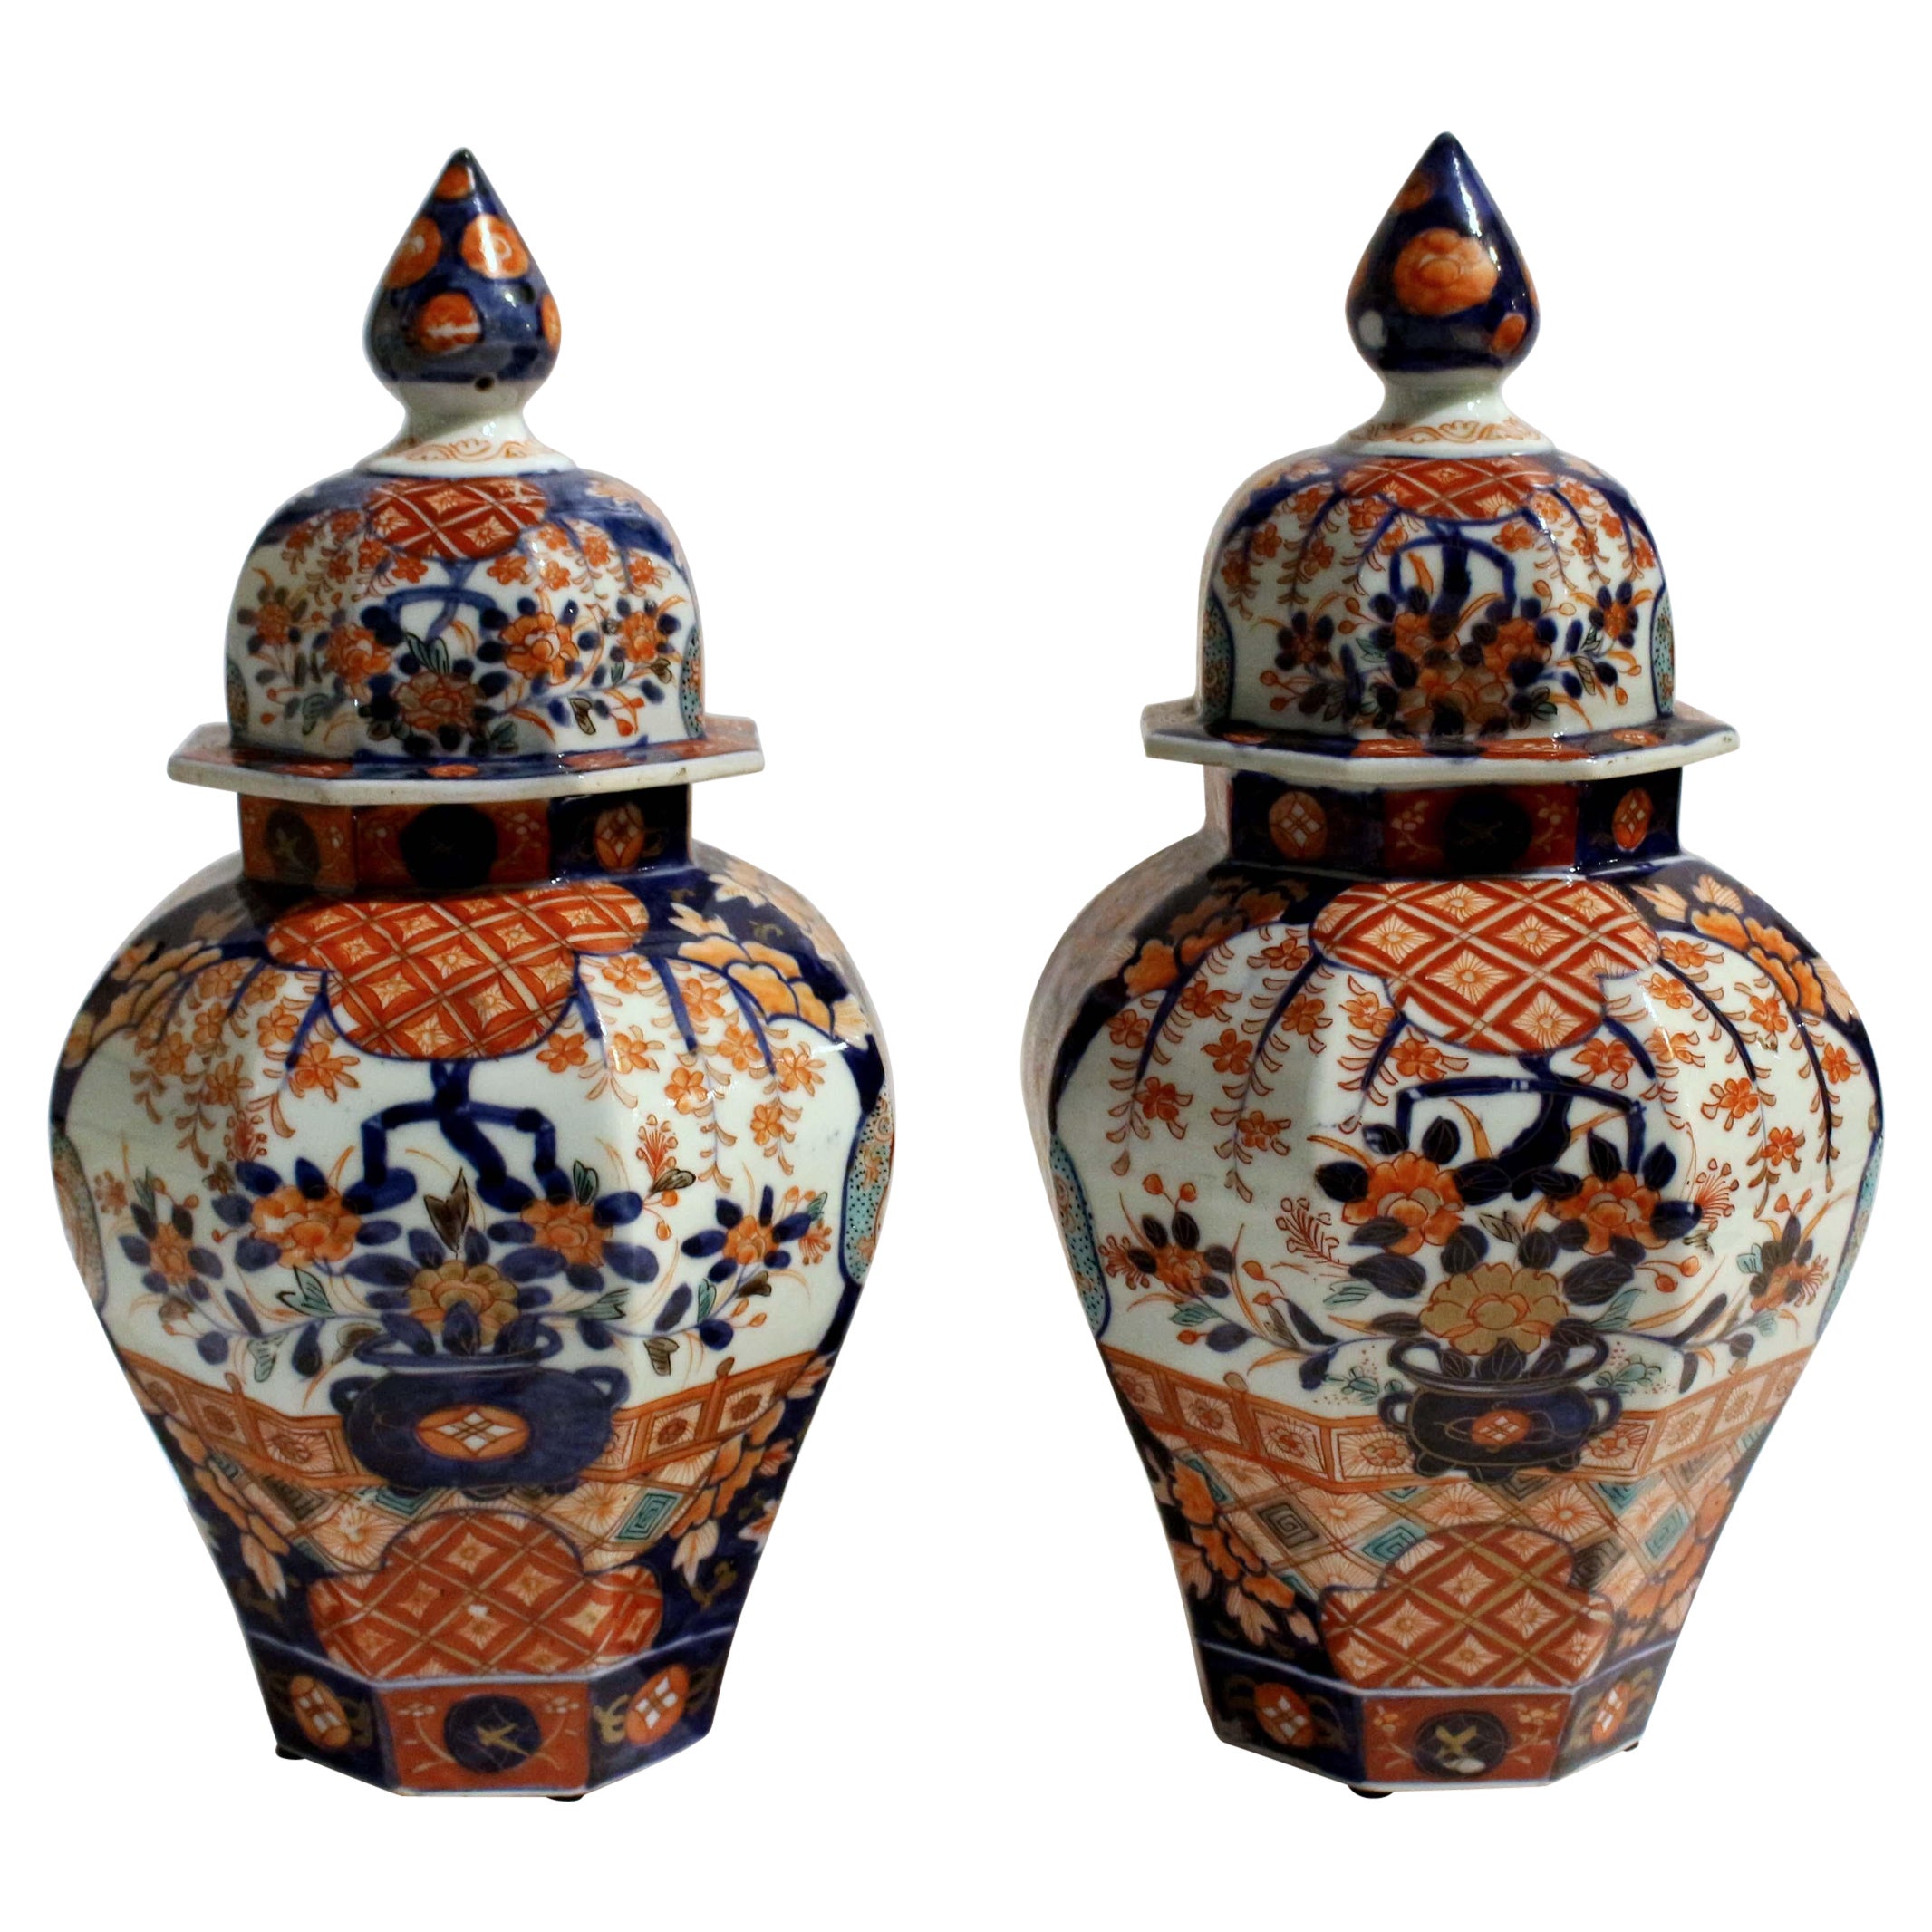 Circa 1860-80 Pair of Japanese Imari Covered Jars For Sale